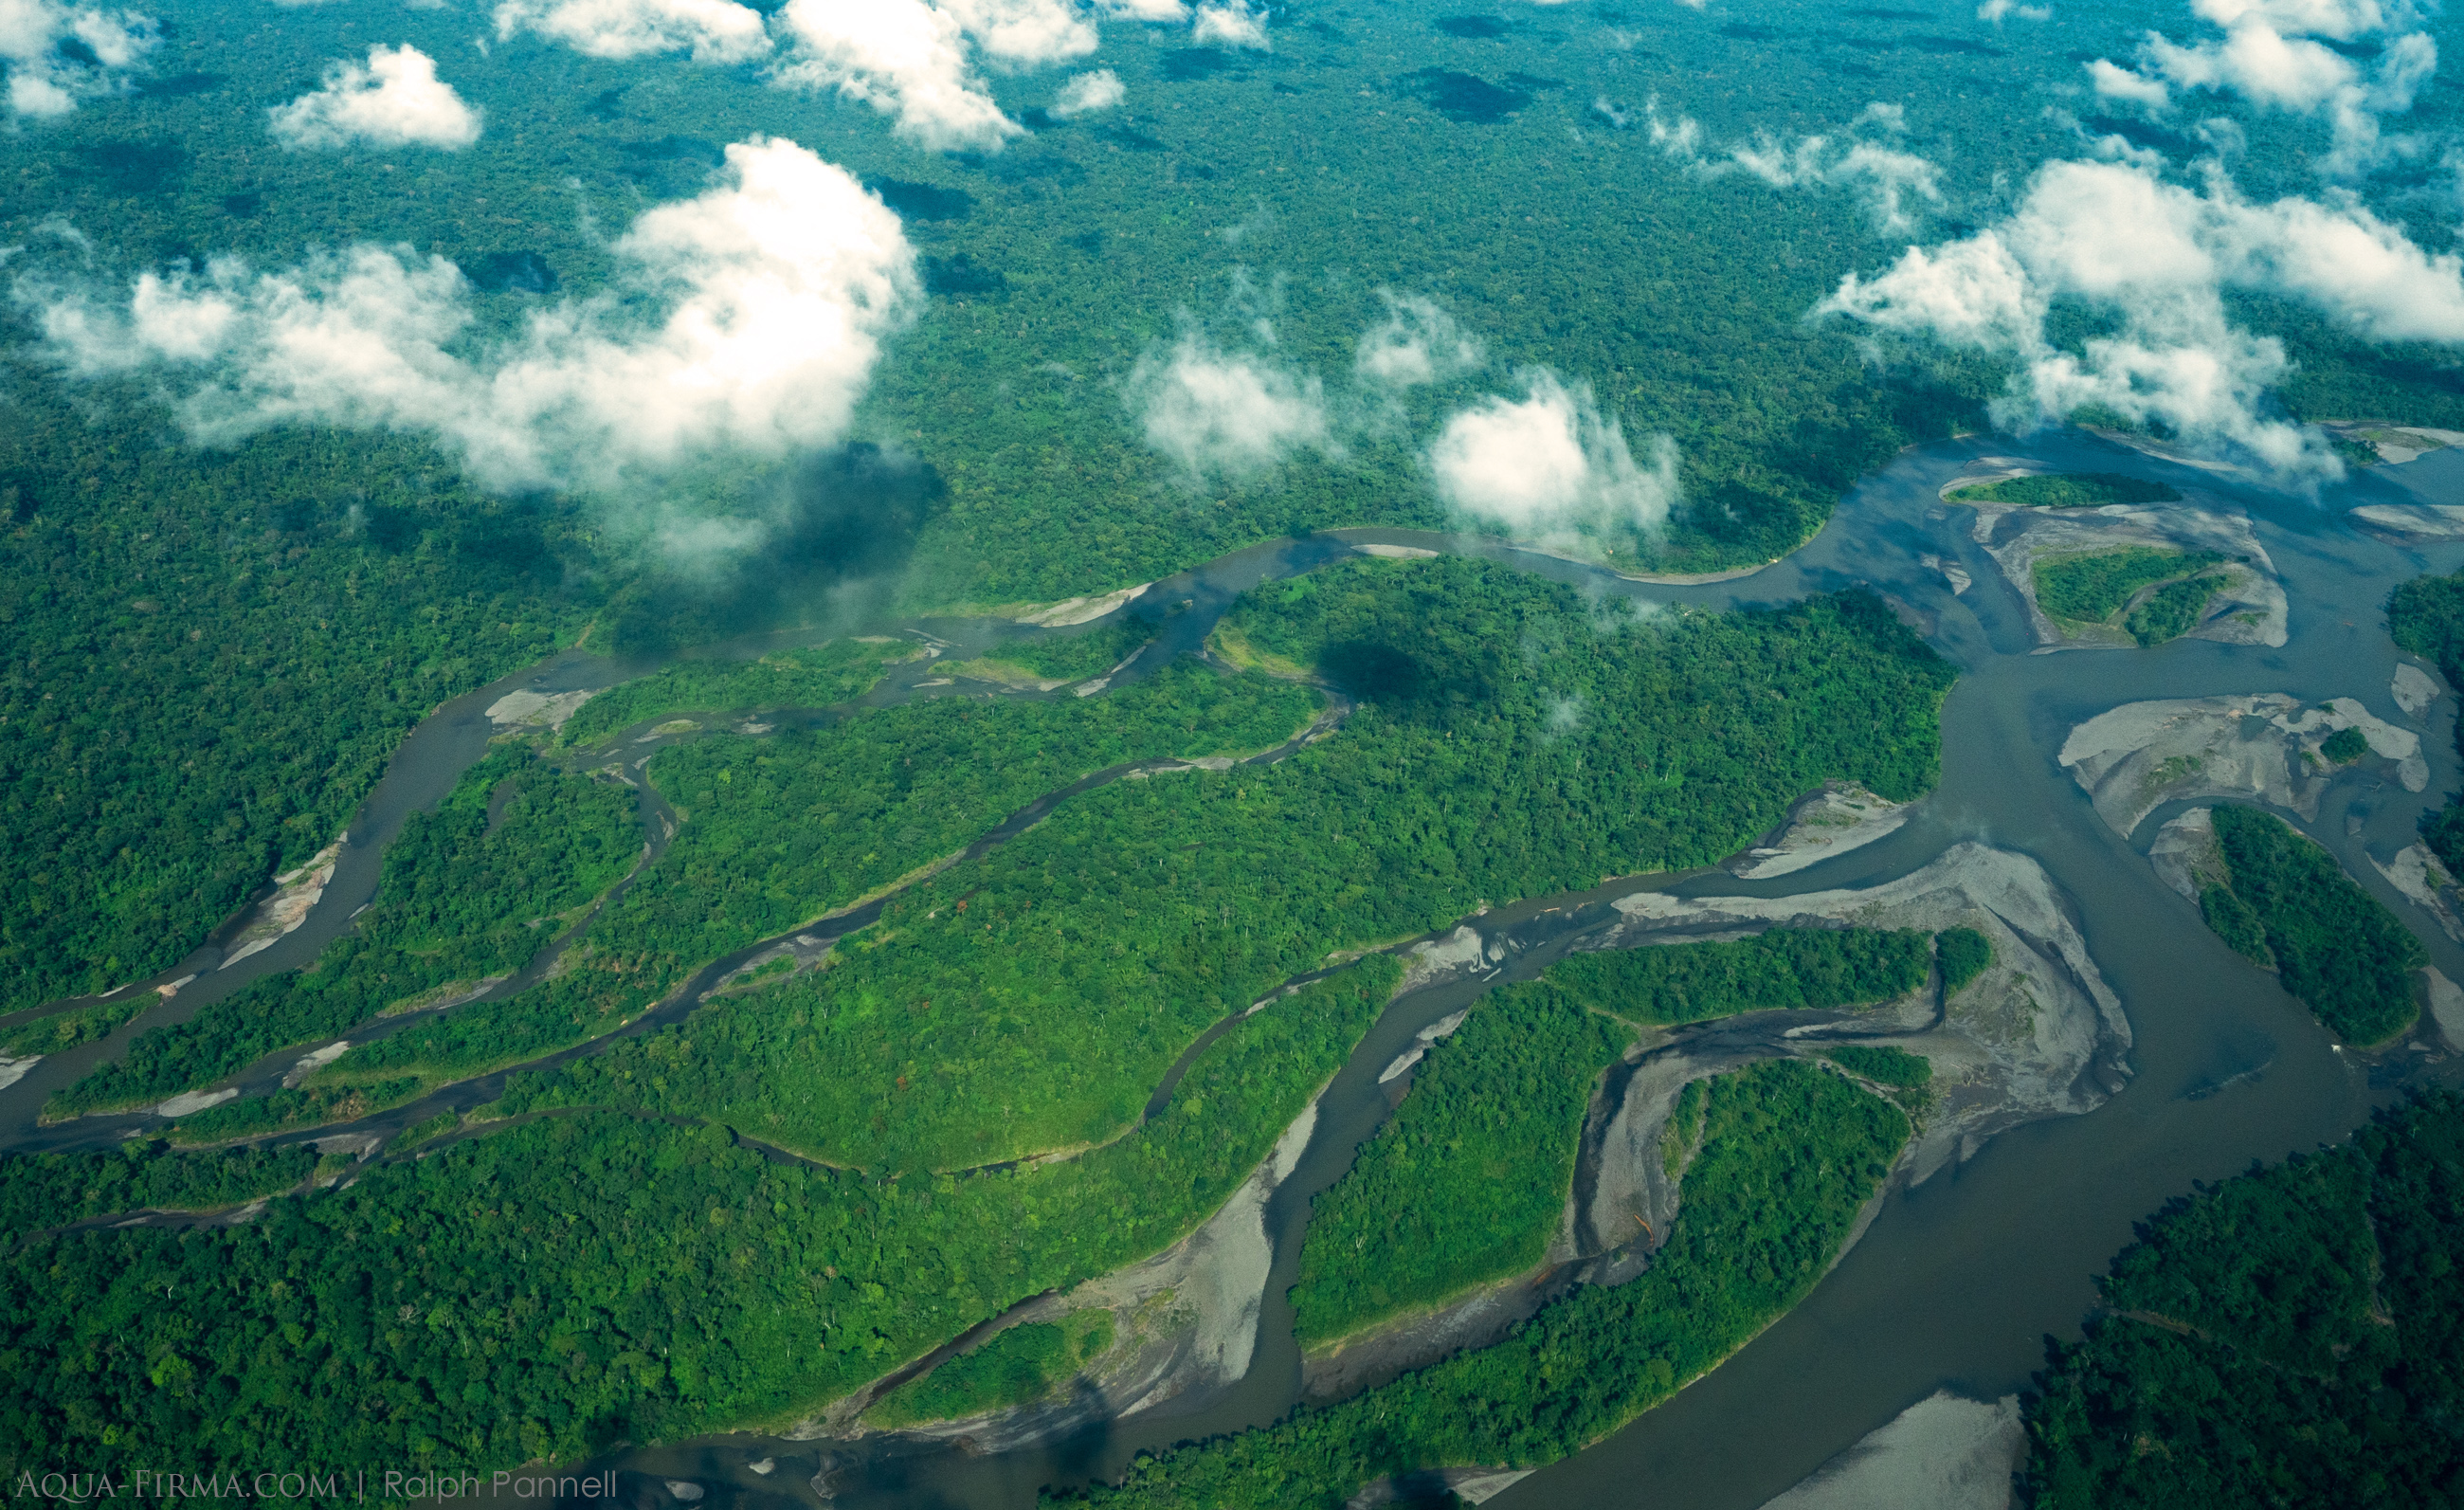 Rio Pastaza Ecuador Amazon tributary from the air